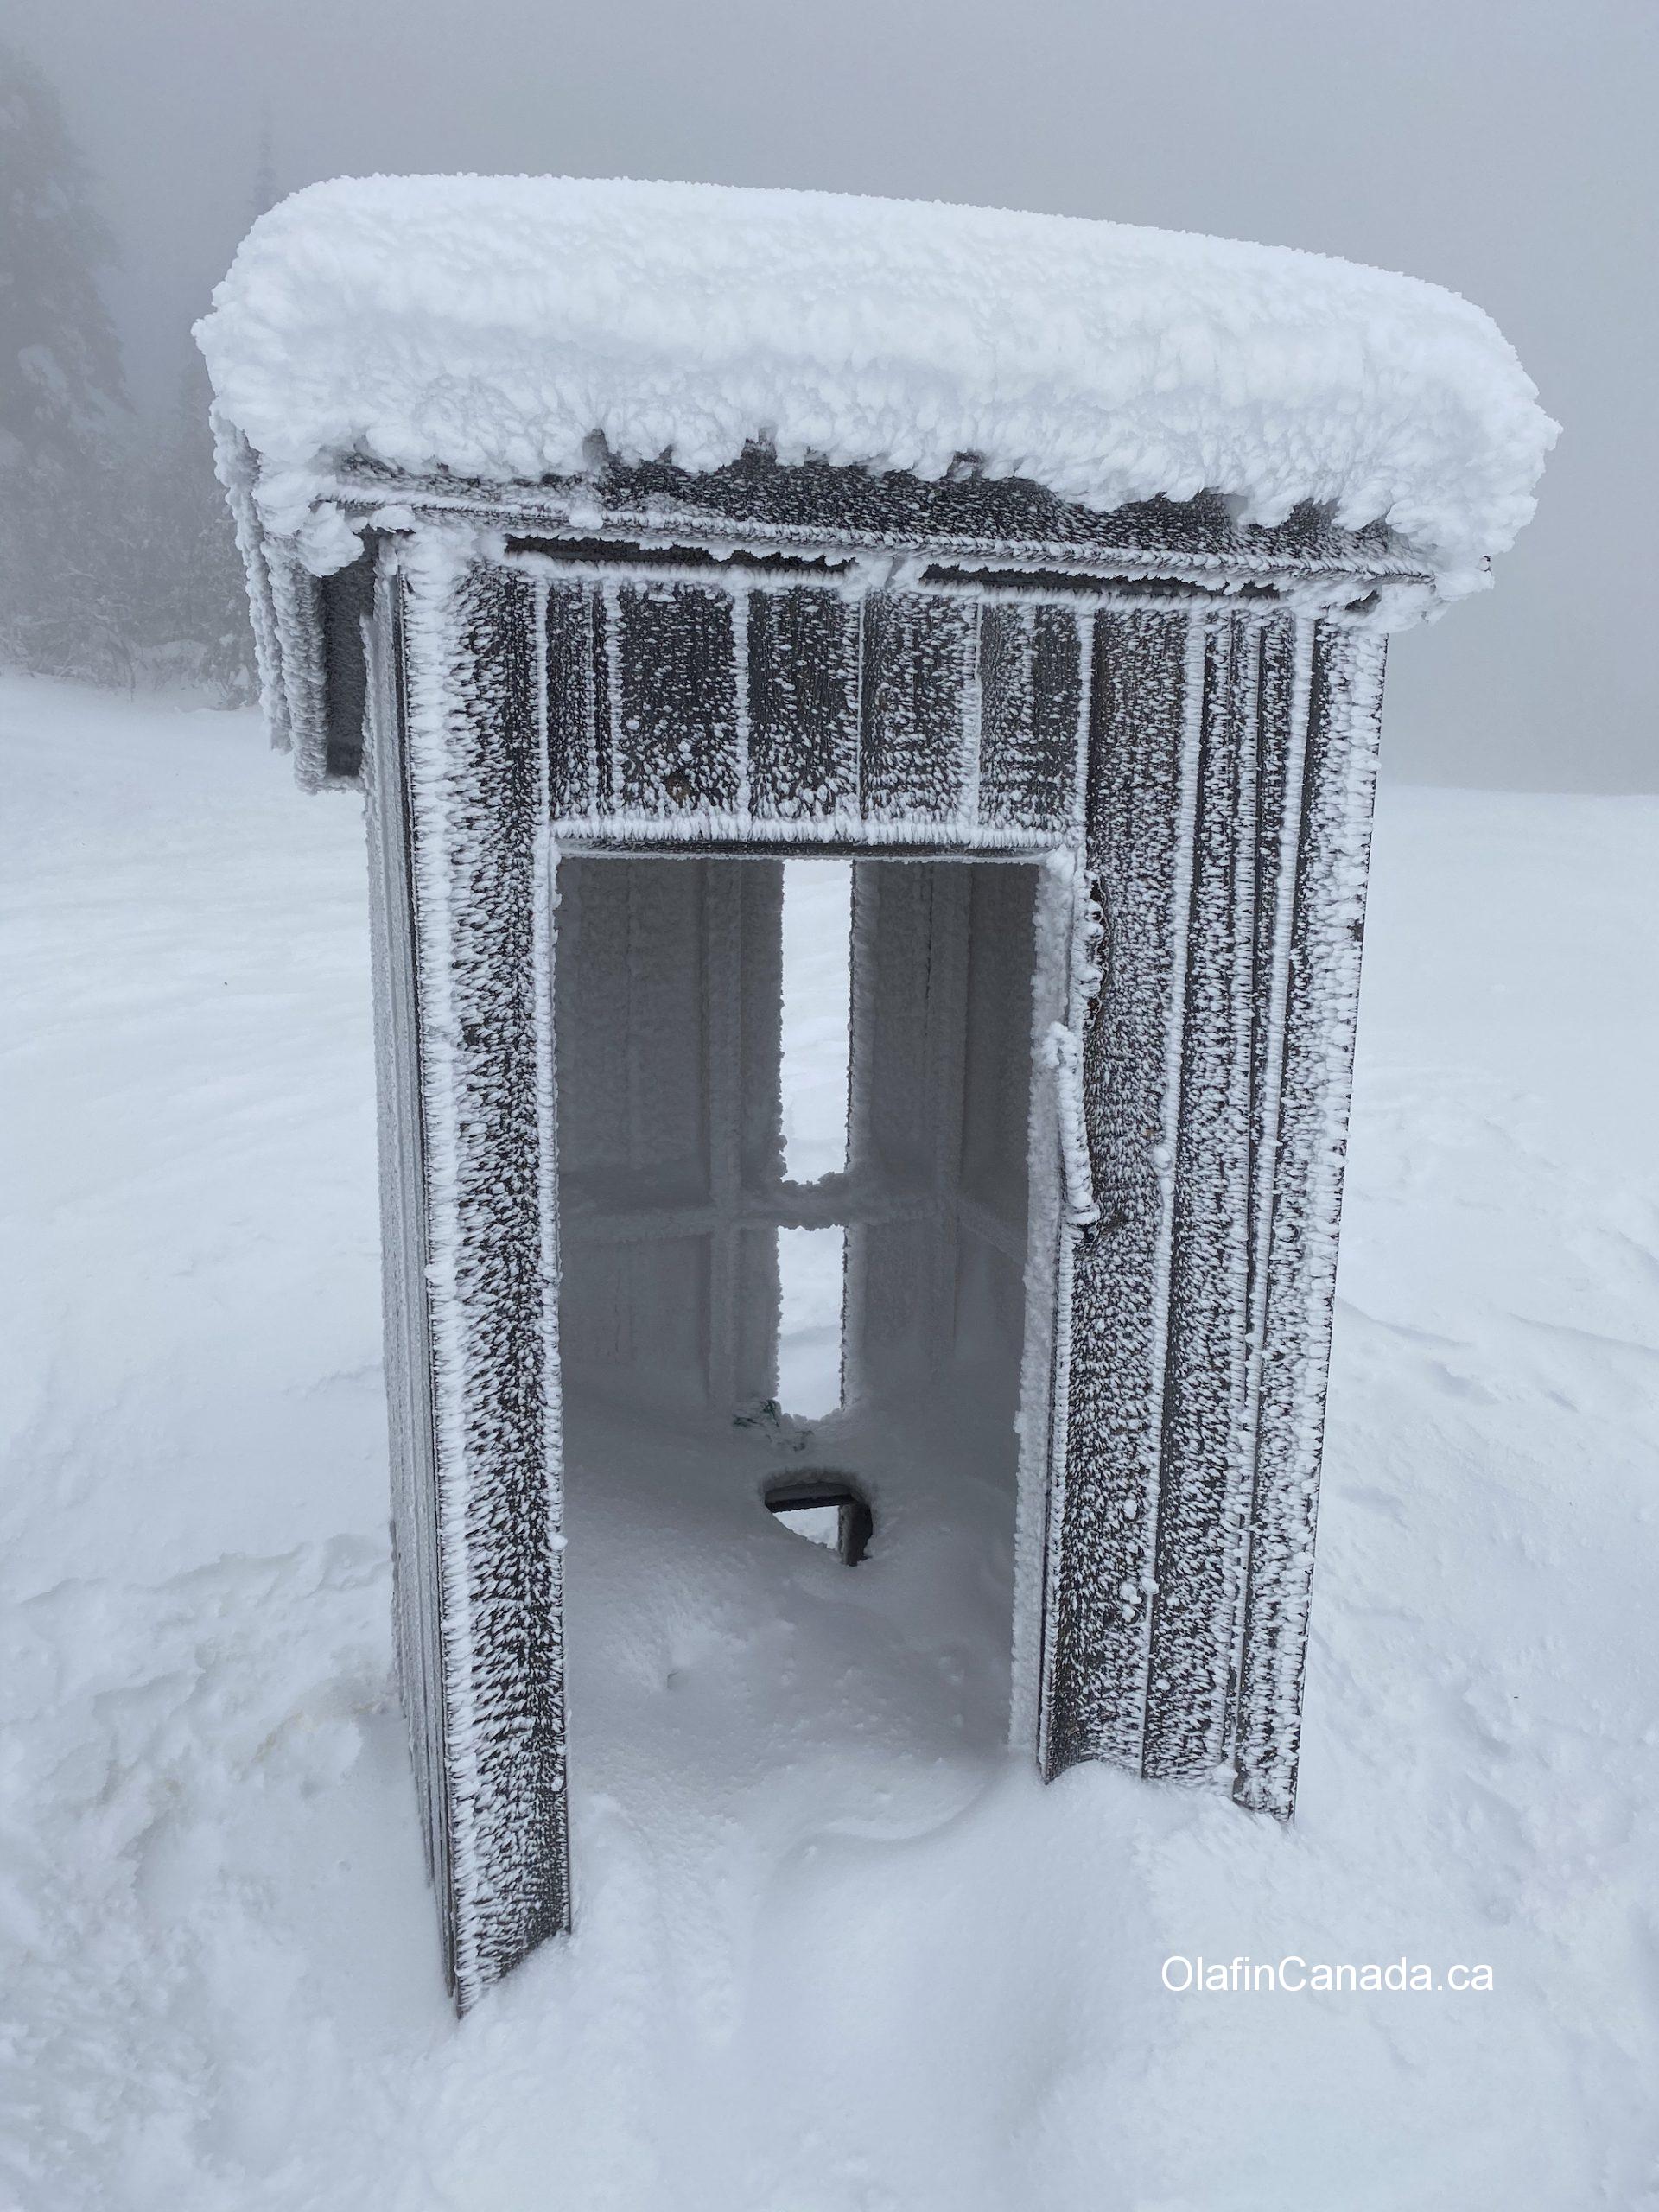 Outhouse on Crystal Mountain ski resort in West Kelowna #olafincanada #britishcolumbia #discoverbc #abandonedbc #westkelowna #crystalmountain #okanagan